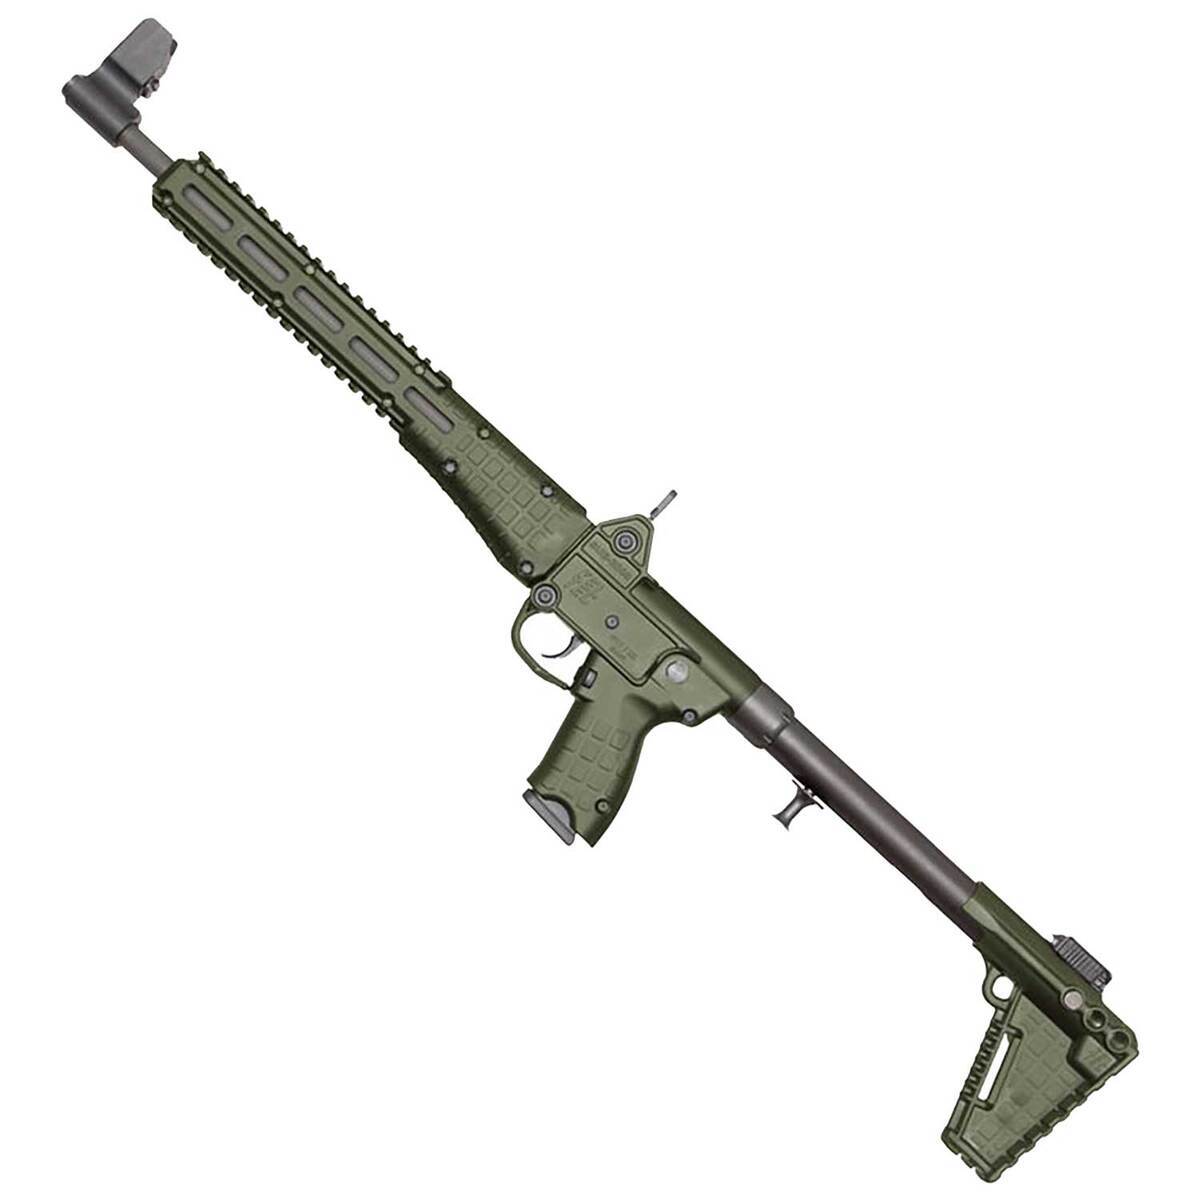 https://www.sportsmans.com/medias/kel-tec-sub-2000-9mm-luger-1625in-od-green-semi-automatic-modern-sporting-rifle-101-rounds-1809893-1.jpg?context=bWFzdGVyfGltYWdlc3w0NDIxN3xpbWFnZS9qcGVnfGFHVTVMMmd5WkM4eE1USXlORGd3T0RFMk1UTXhNQzh4T0RBNU9Ea3pMVEZmWW1GelpTMWpiMjUyWlhKemFXOXVSbTl5YldGMFh6RXlNREF0WTI5dWRtVnljMmx2YmtadmNtMWhkQXw4MjczMmYxMjJlOTU4MDJlNWY0NjQ2OGQxZDdiYTViM2YzOGE1M2Q1YmU0NTFlM2U1MzU4YTdlZDFmODMzYzk2